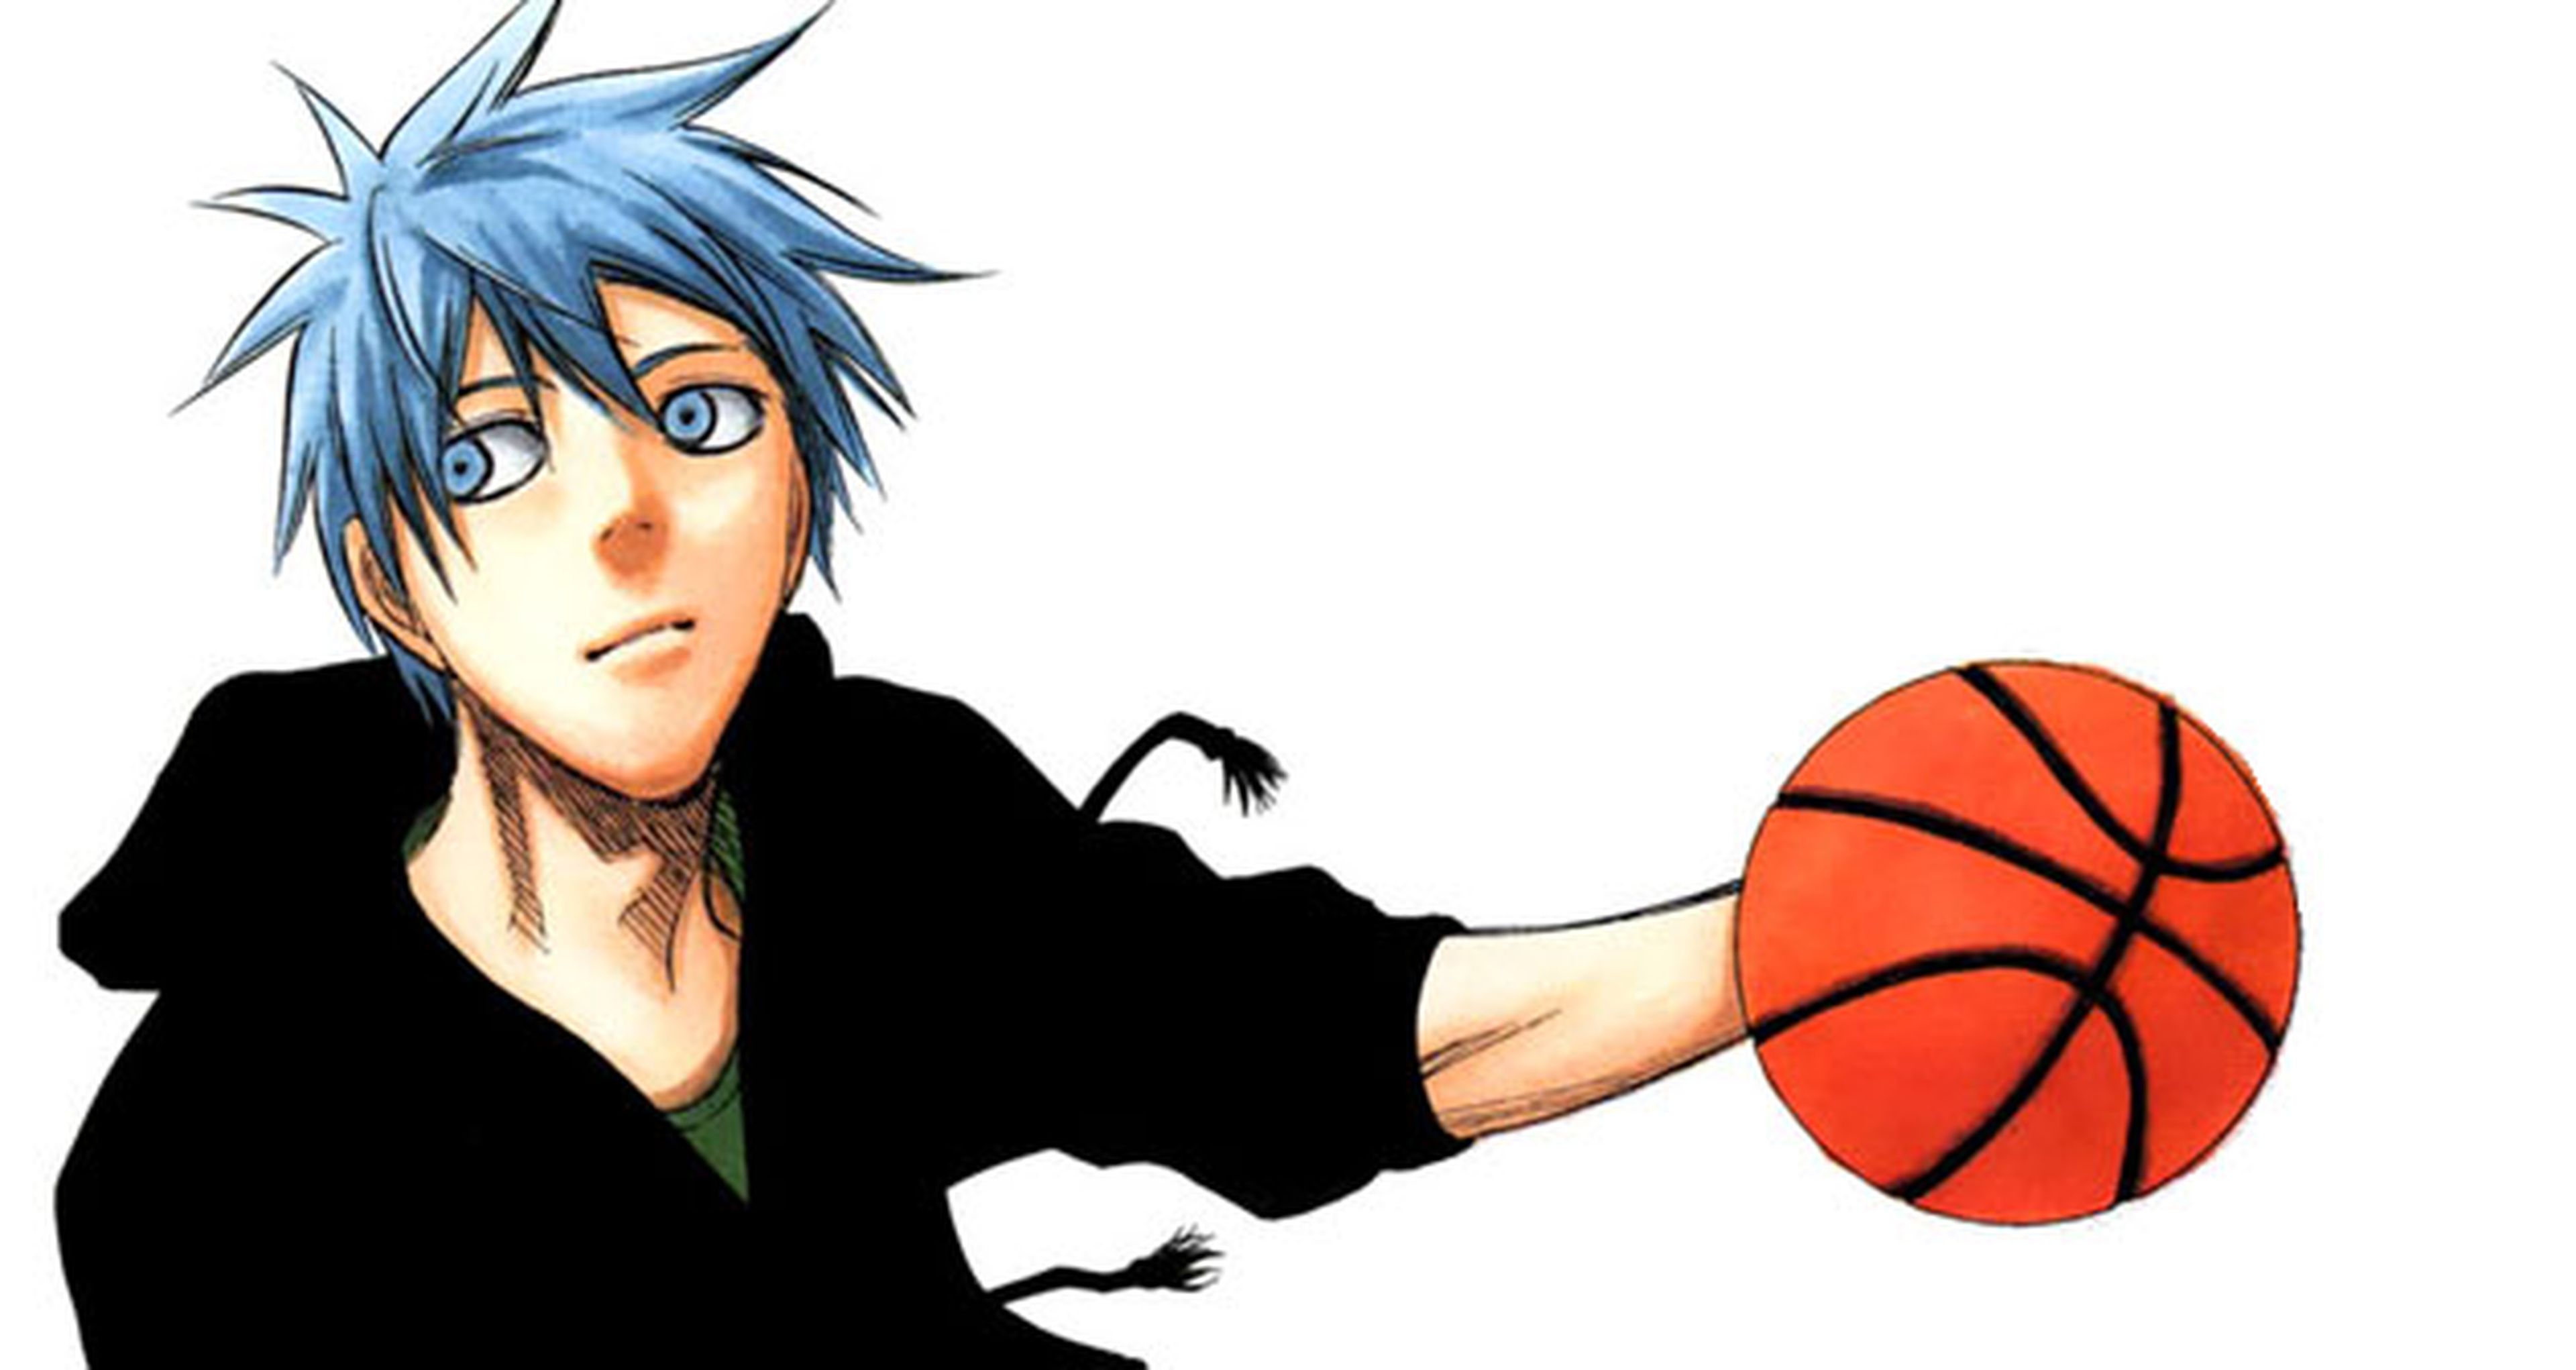 Termina el manga Kuroko no Basket